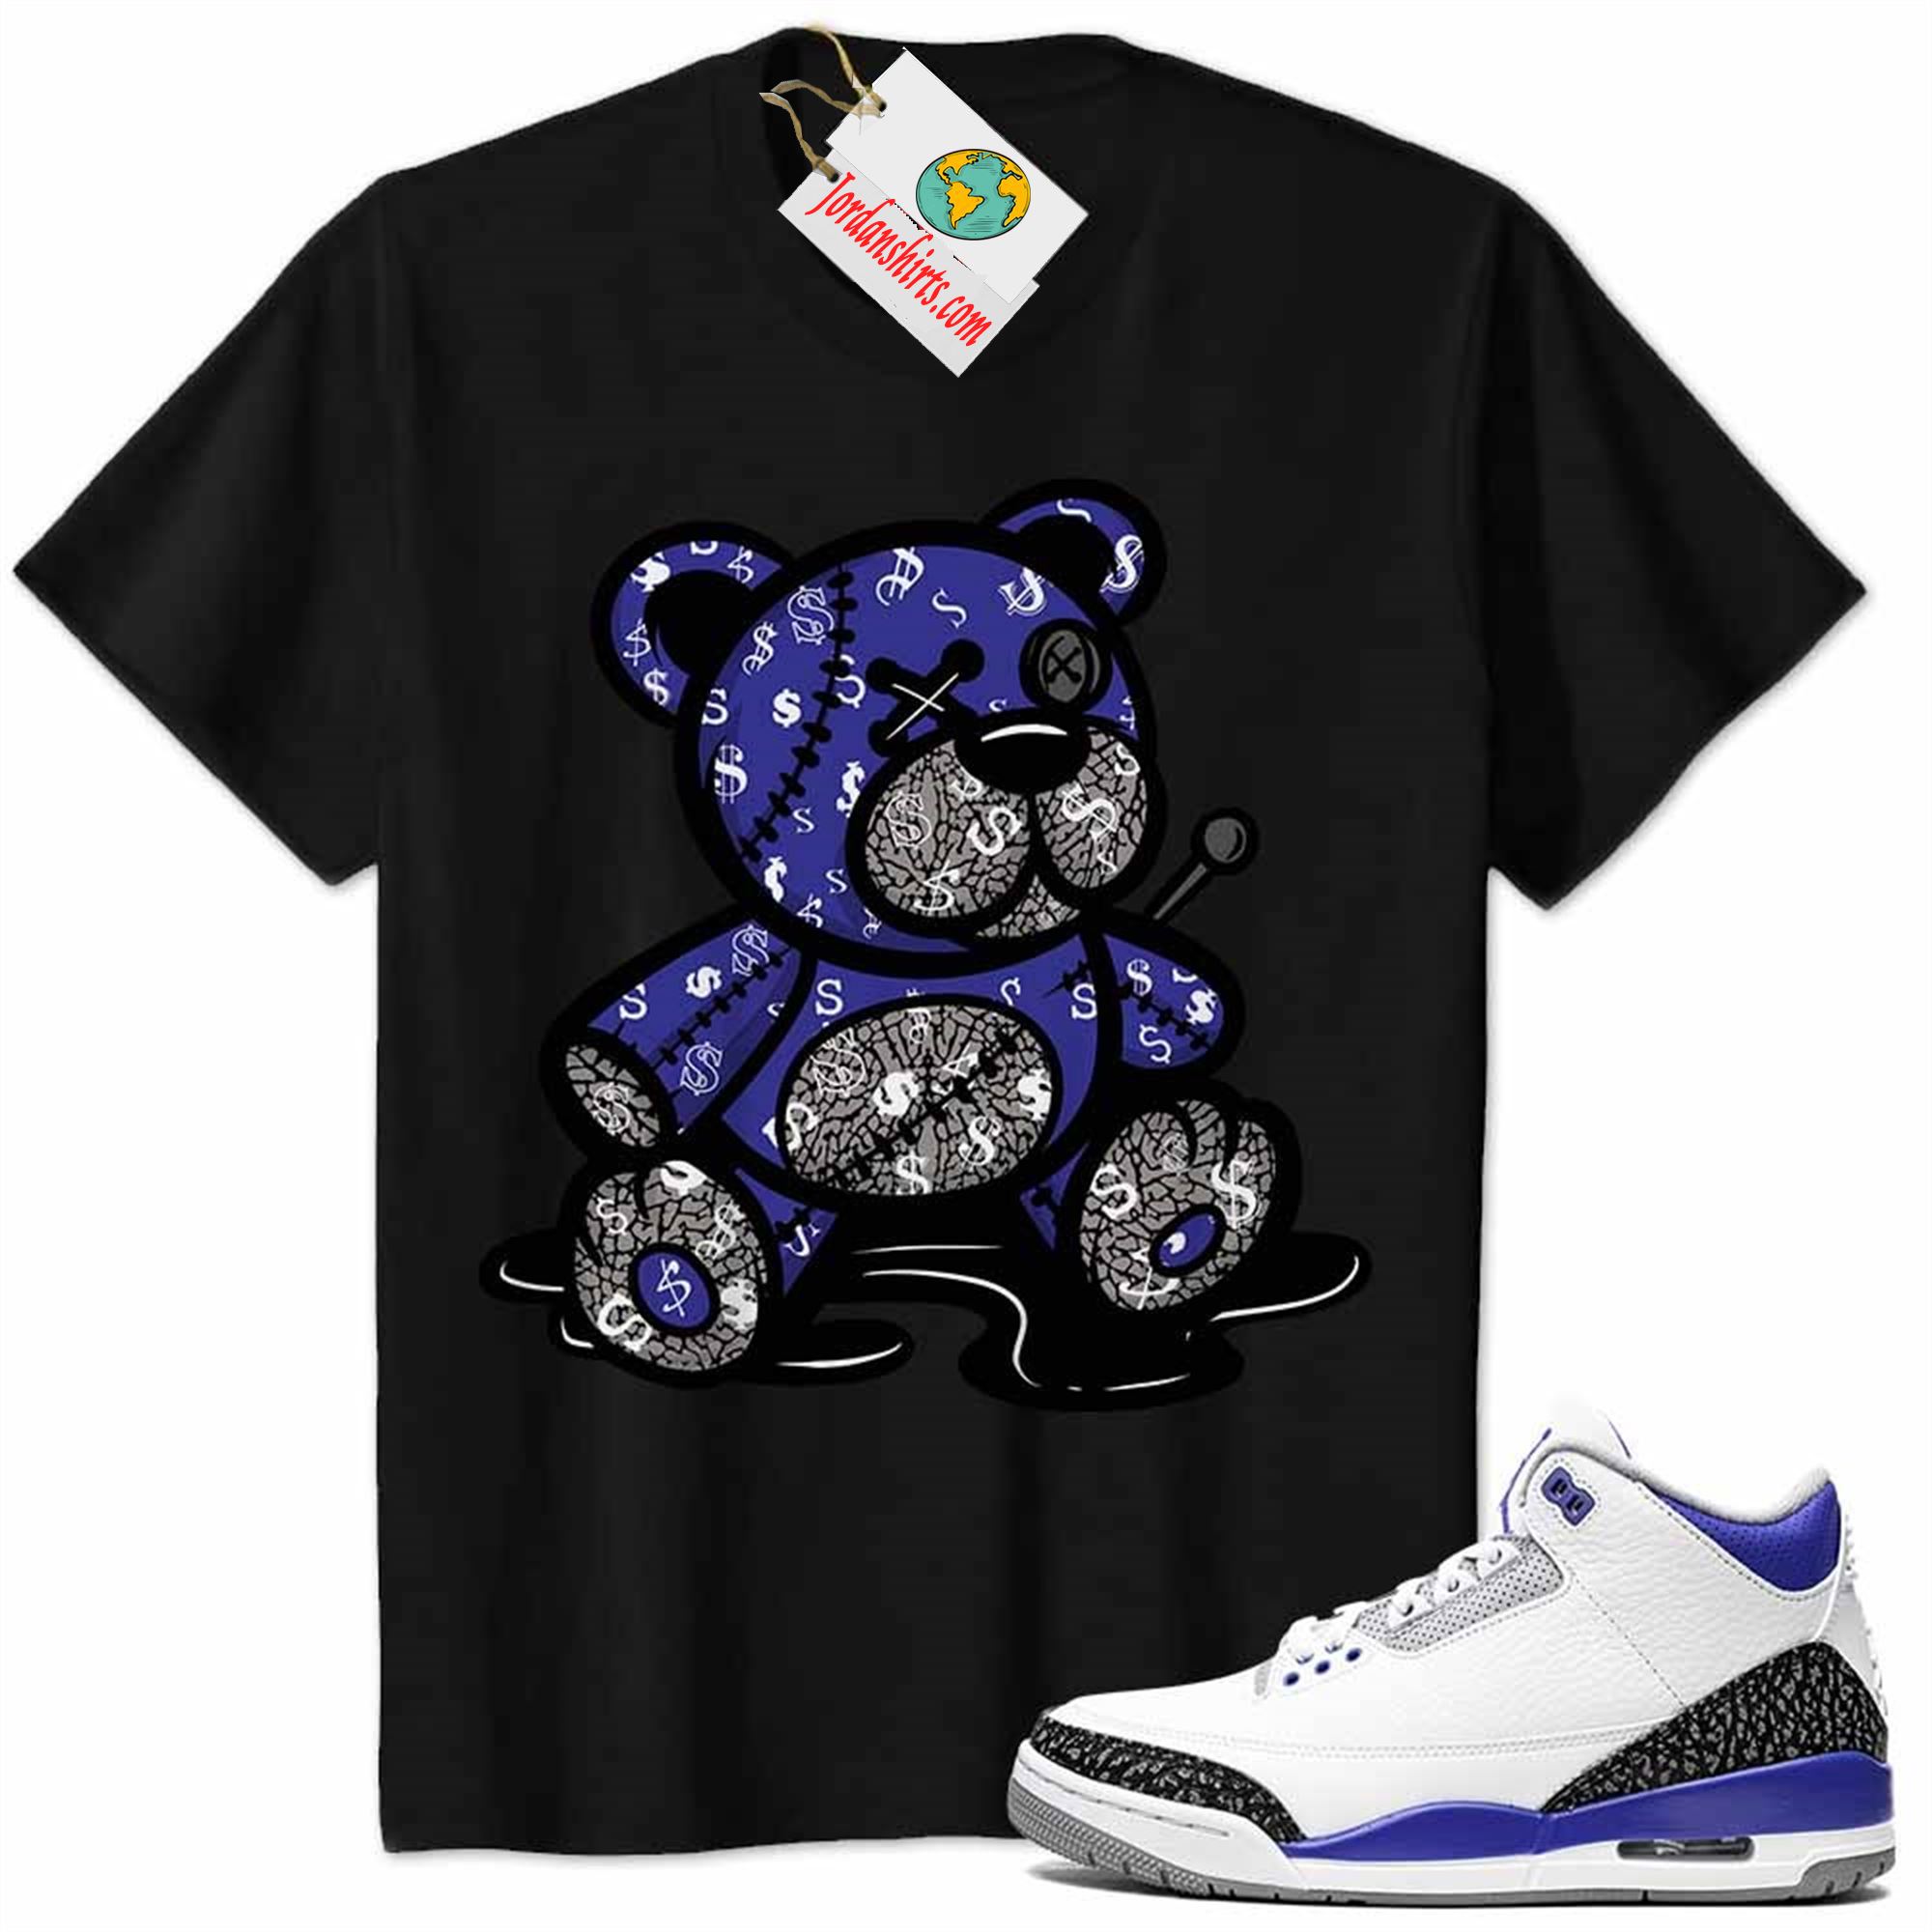 Jordan 3 Shirt, Jordan 3 Racer Blue Shirt Teddy Bear All Money In Black Plus Size Up To 5xl